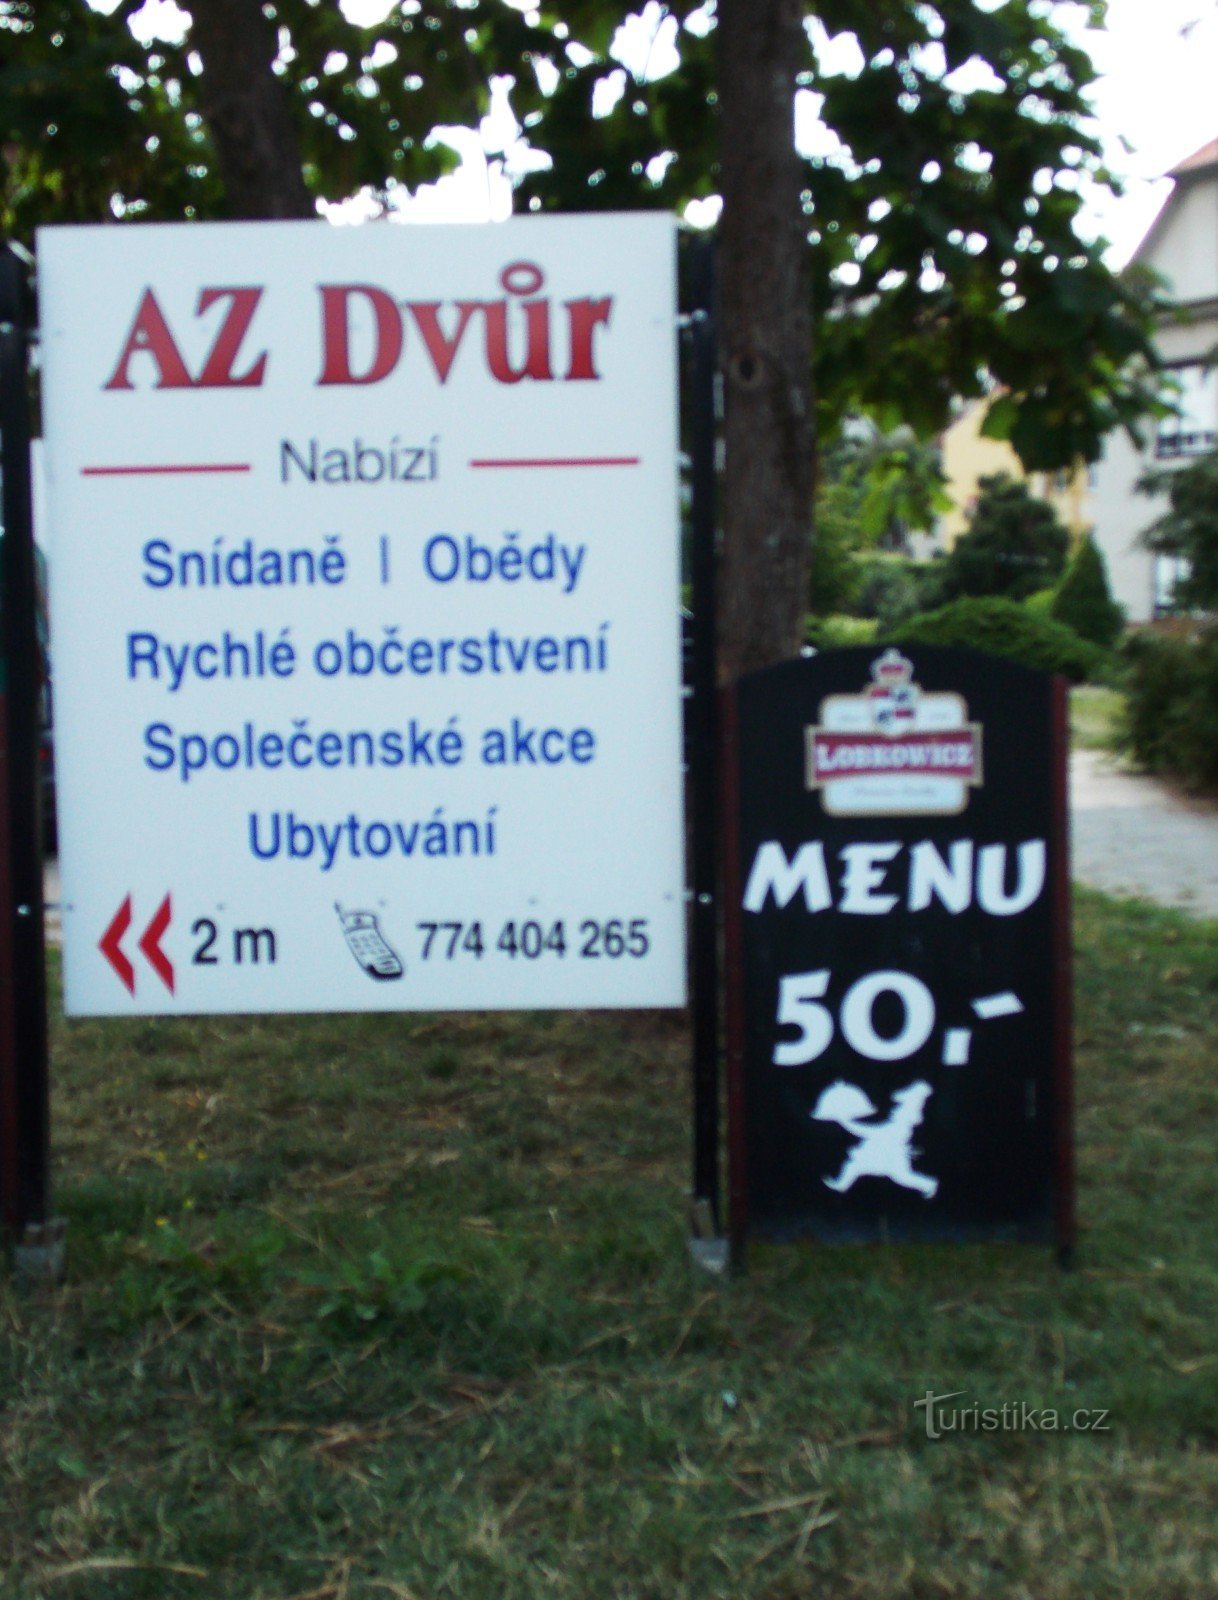 Restavracija AZ dvůr v Luhačovicah